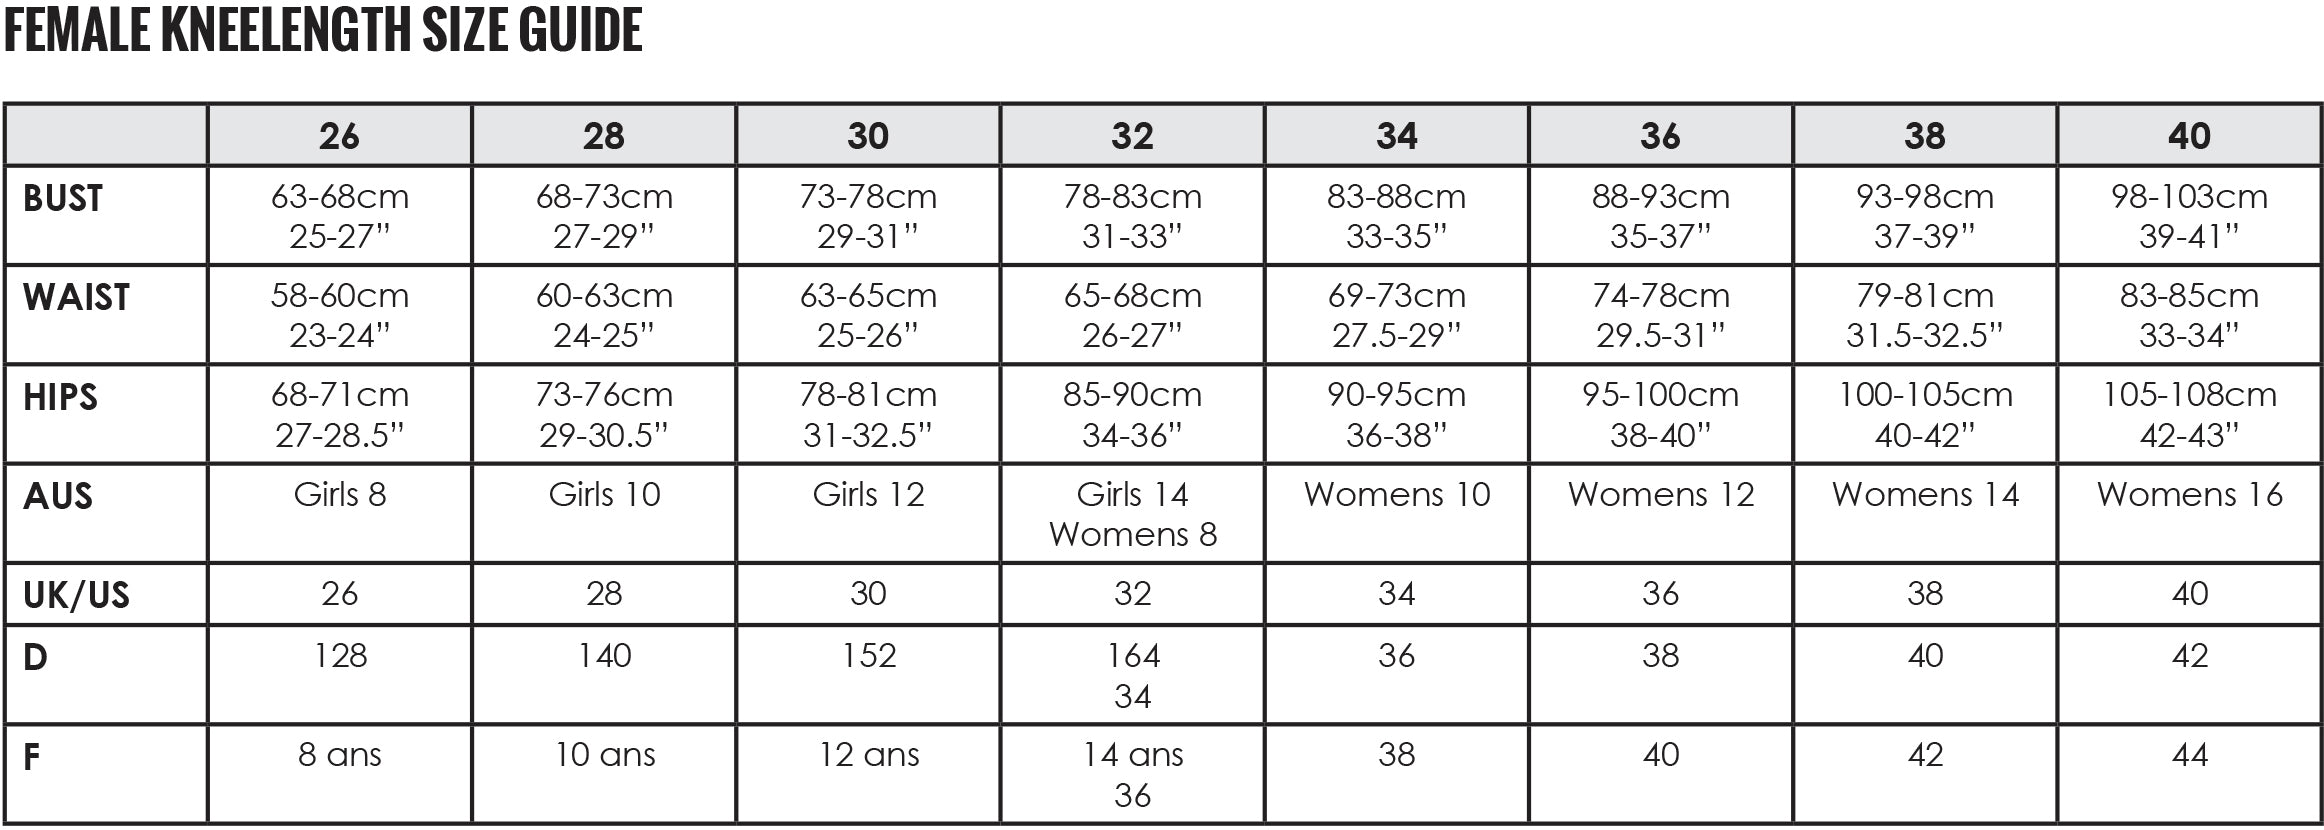 AMANZI Female Kneelength Size Guide